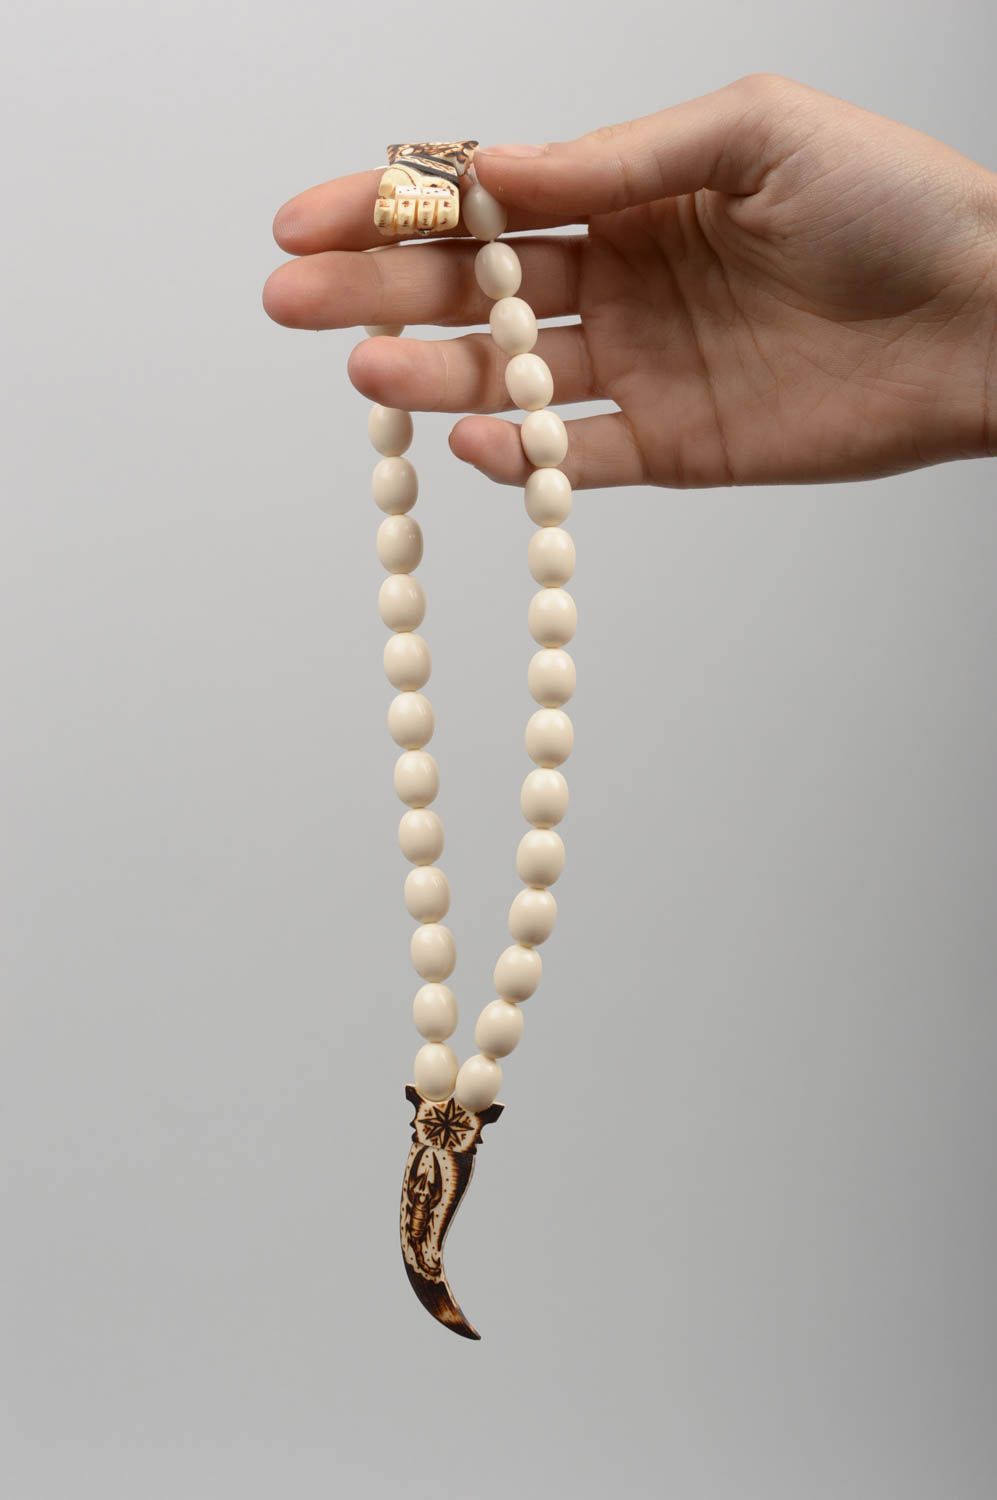 Handmade rosary beads church accessories spiritual gifts worry beads mens gifts photo 5